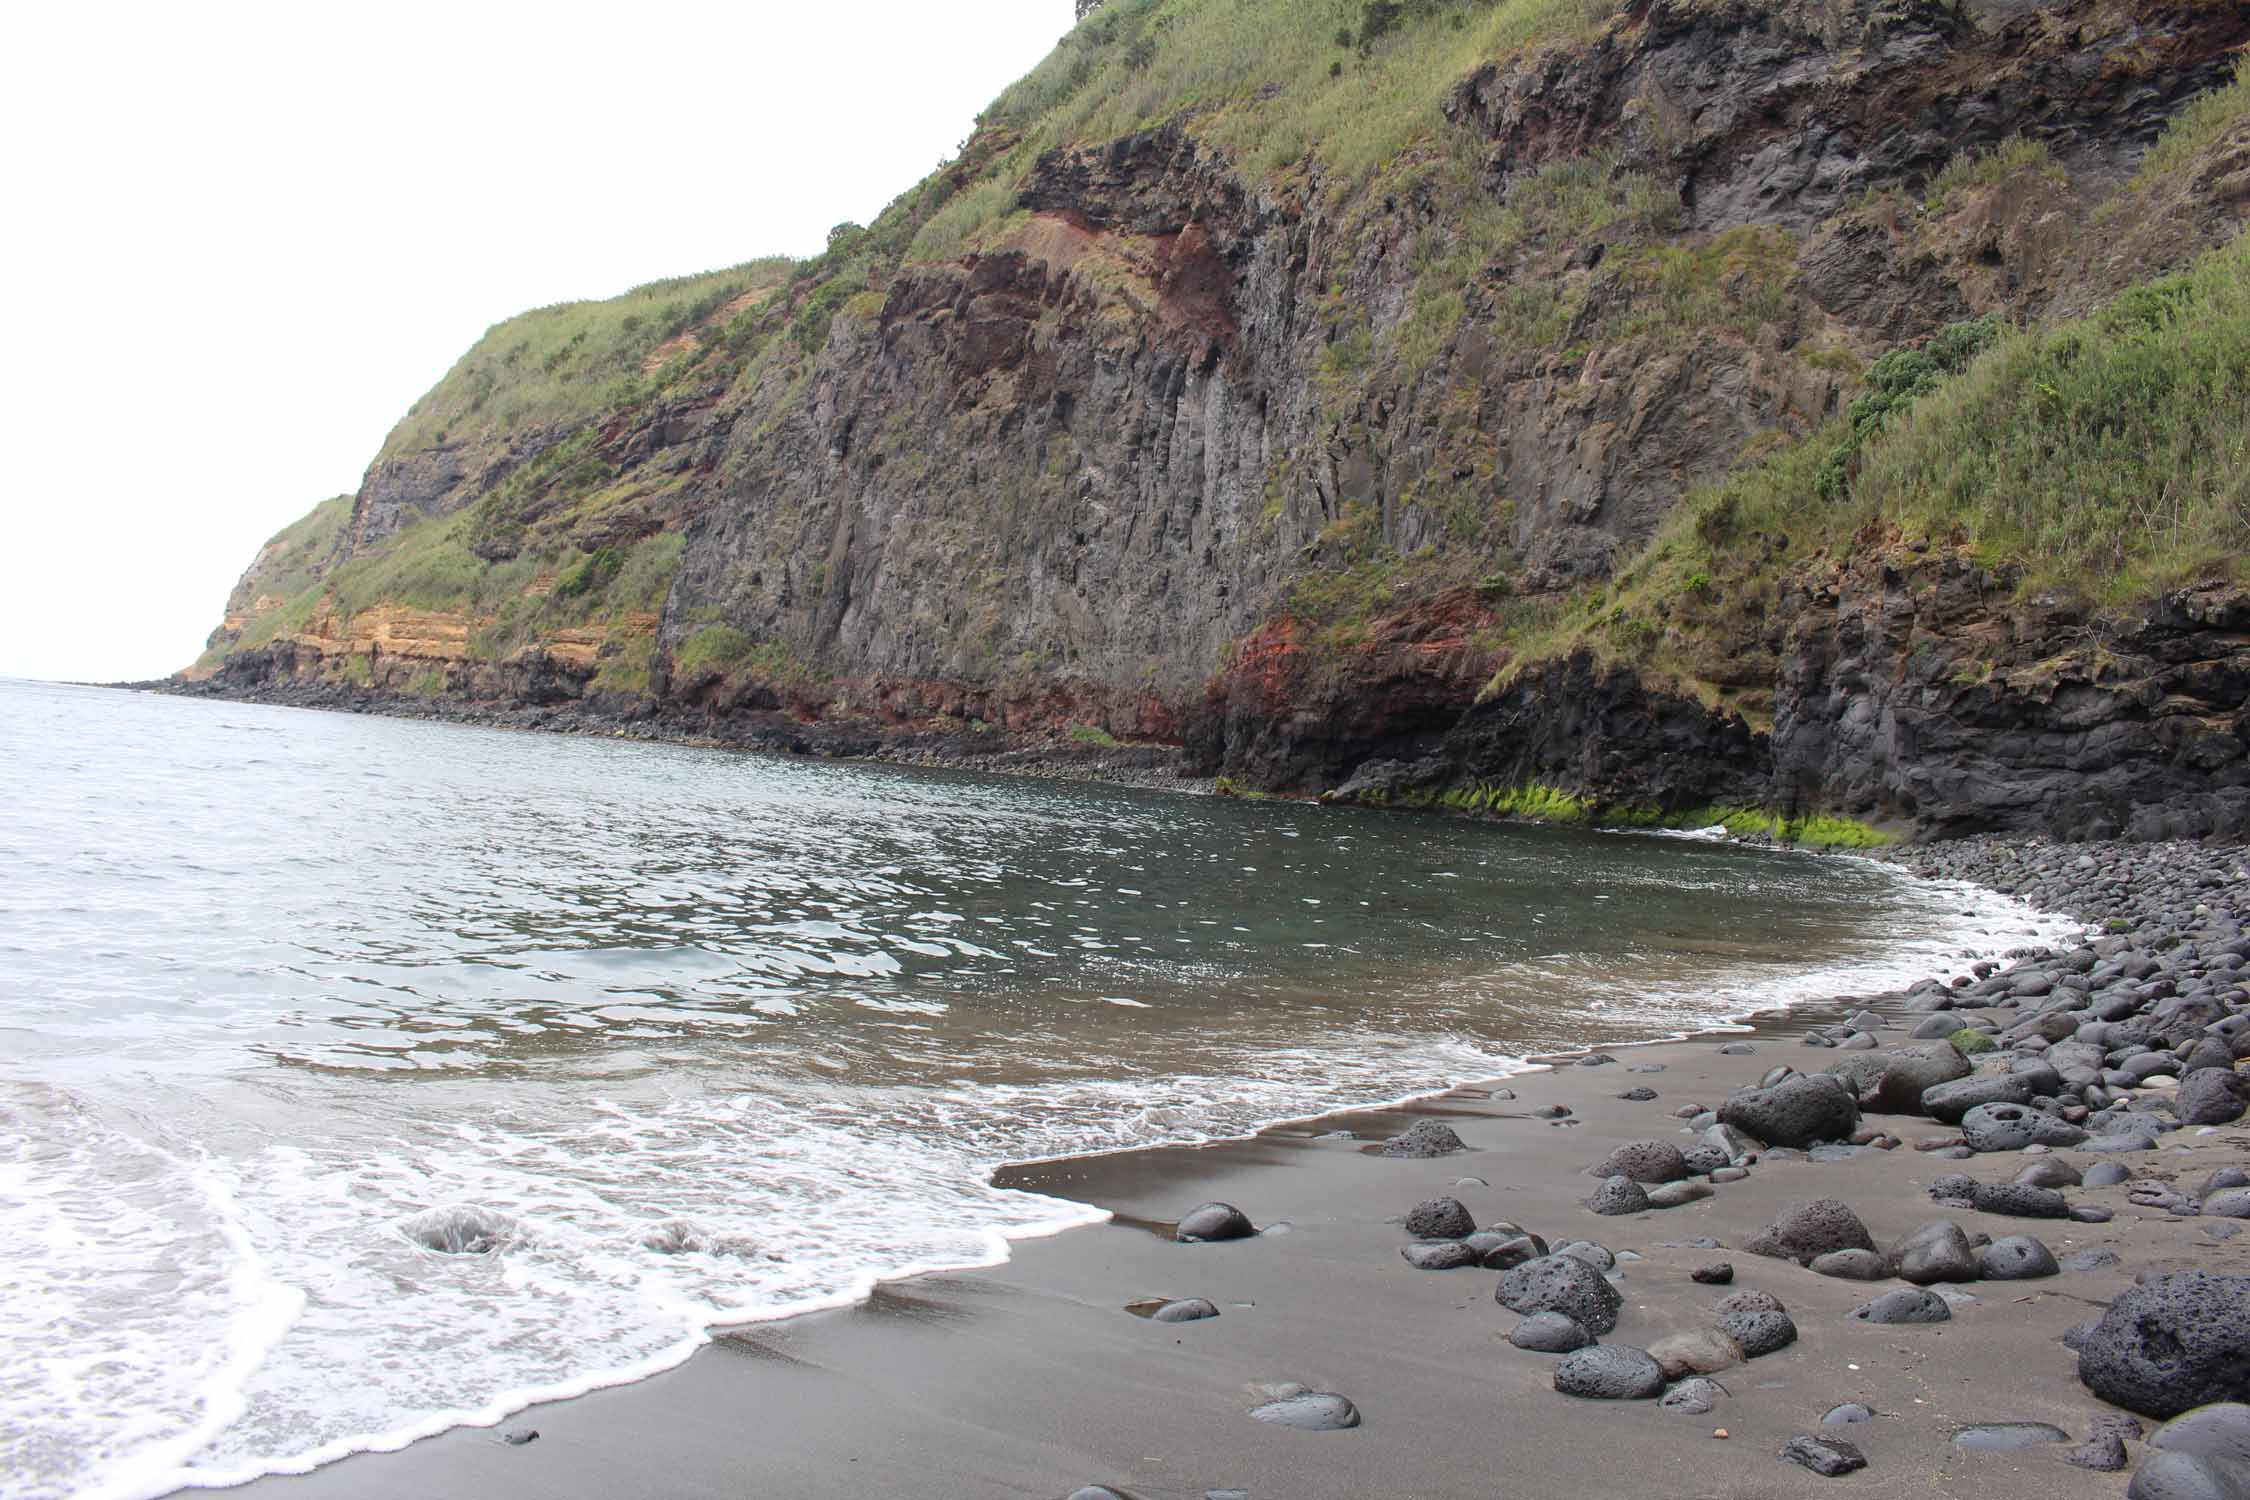 La plage de Caloura sur l'île de São Miguel, Açores